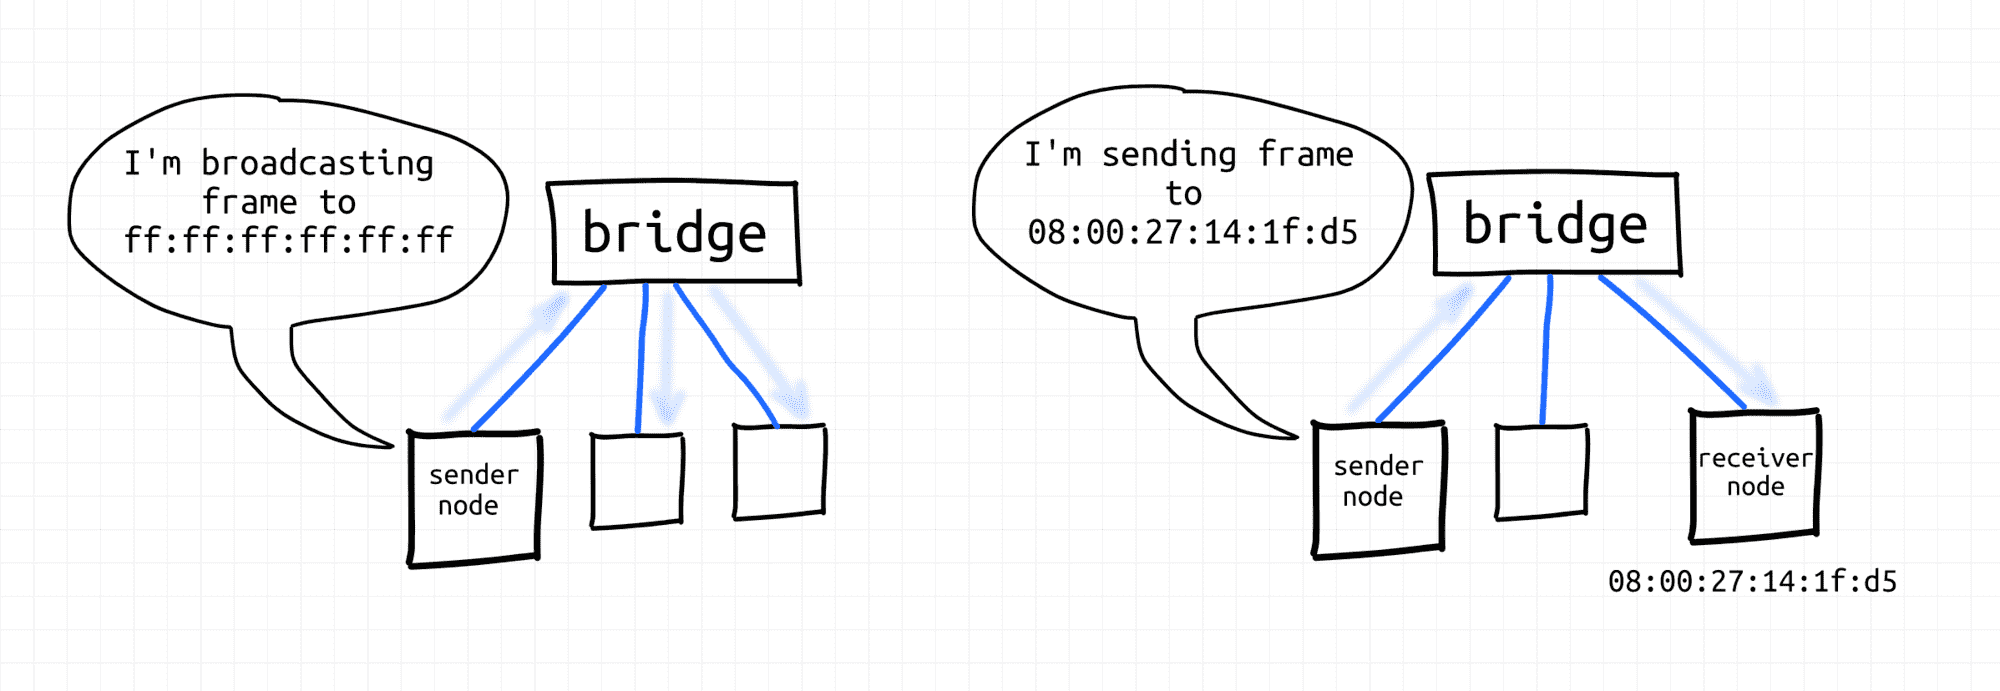 Bridge network function